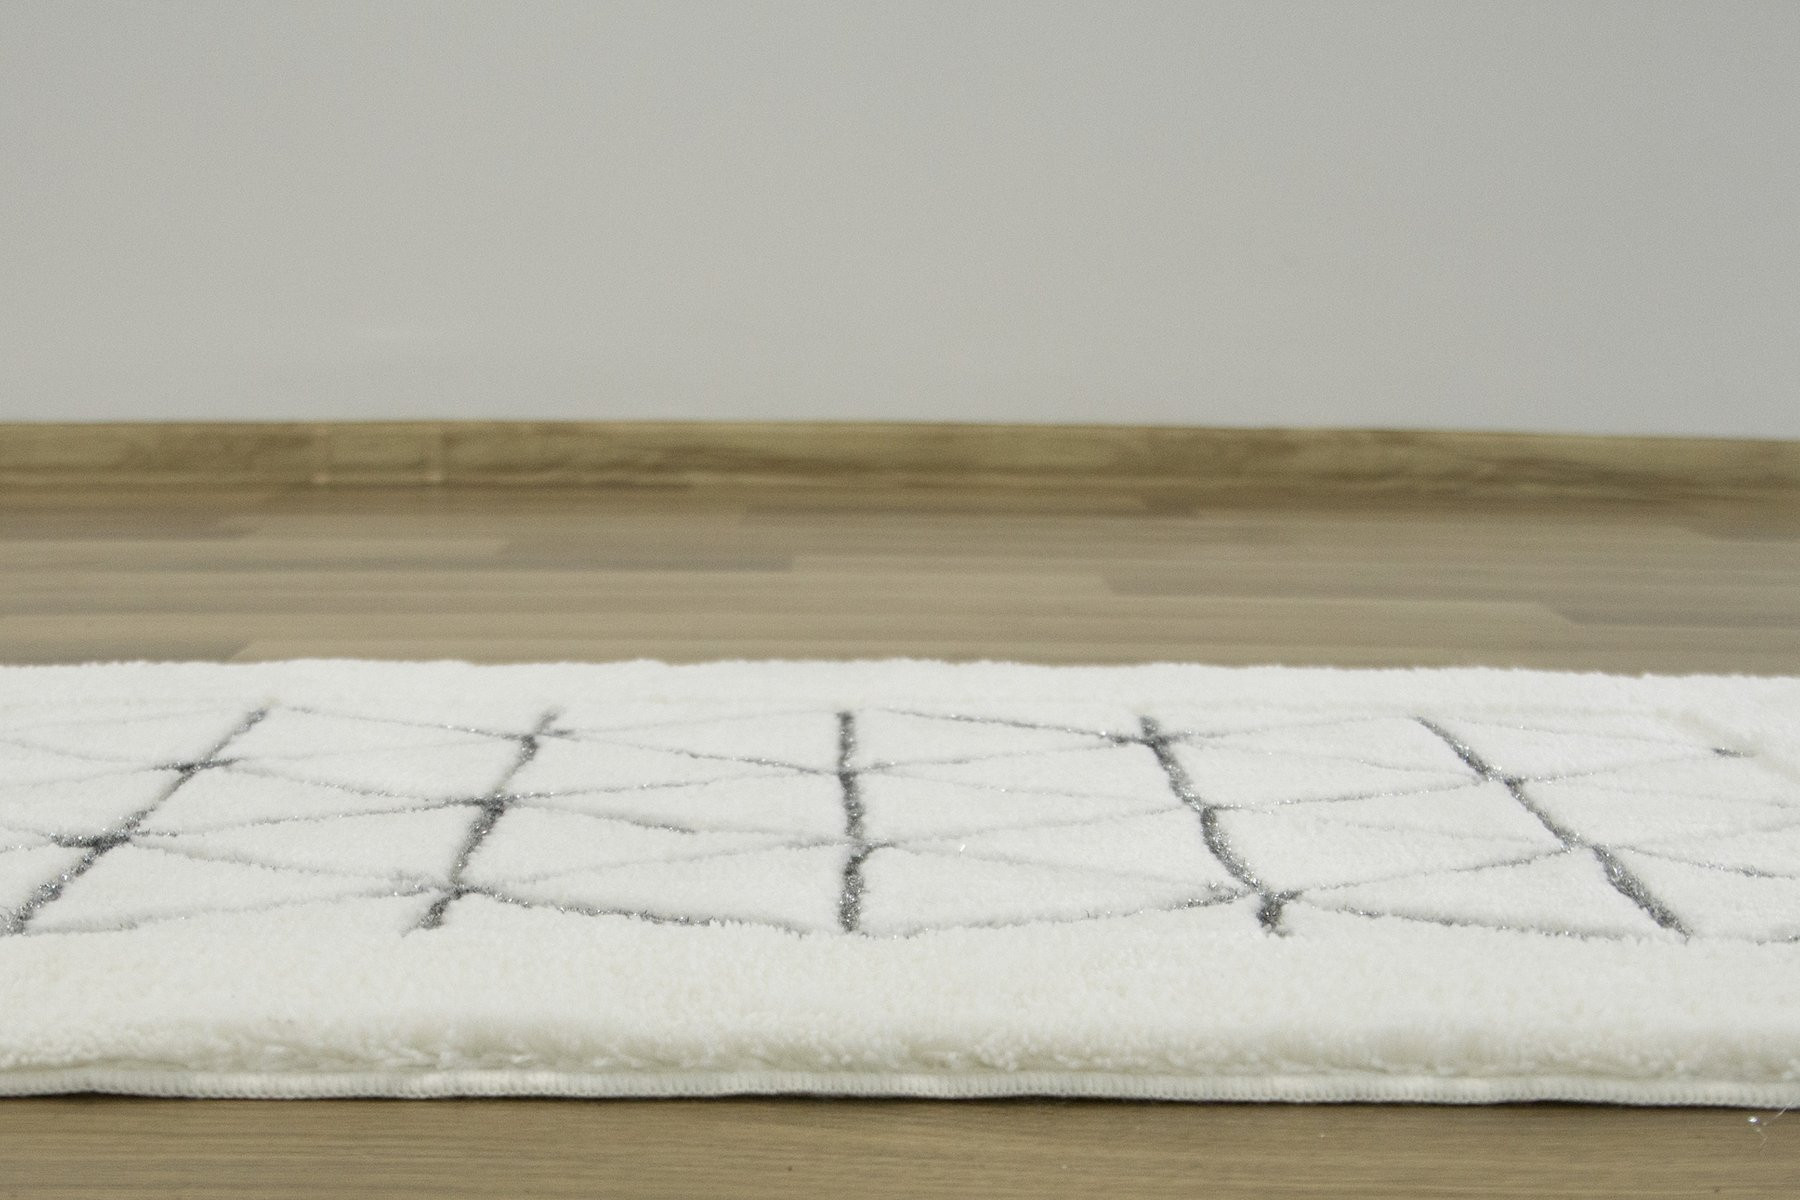 Koupelnový kobereček Jarpol Agadir Lurex bílý